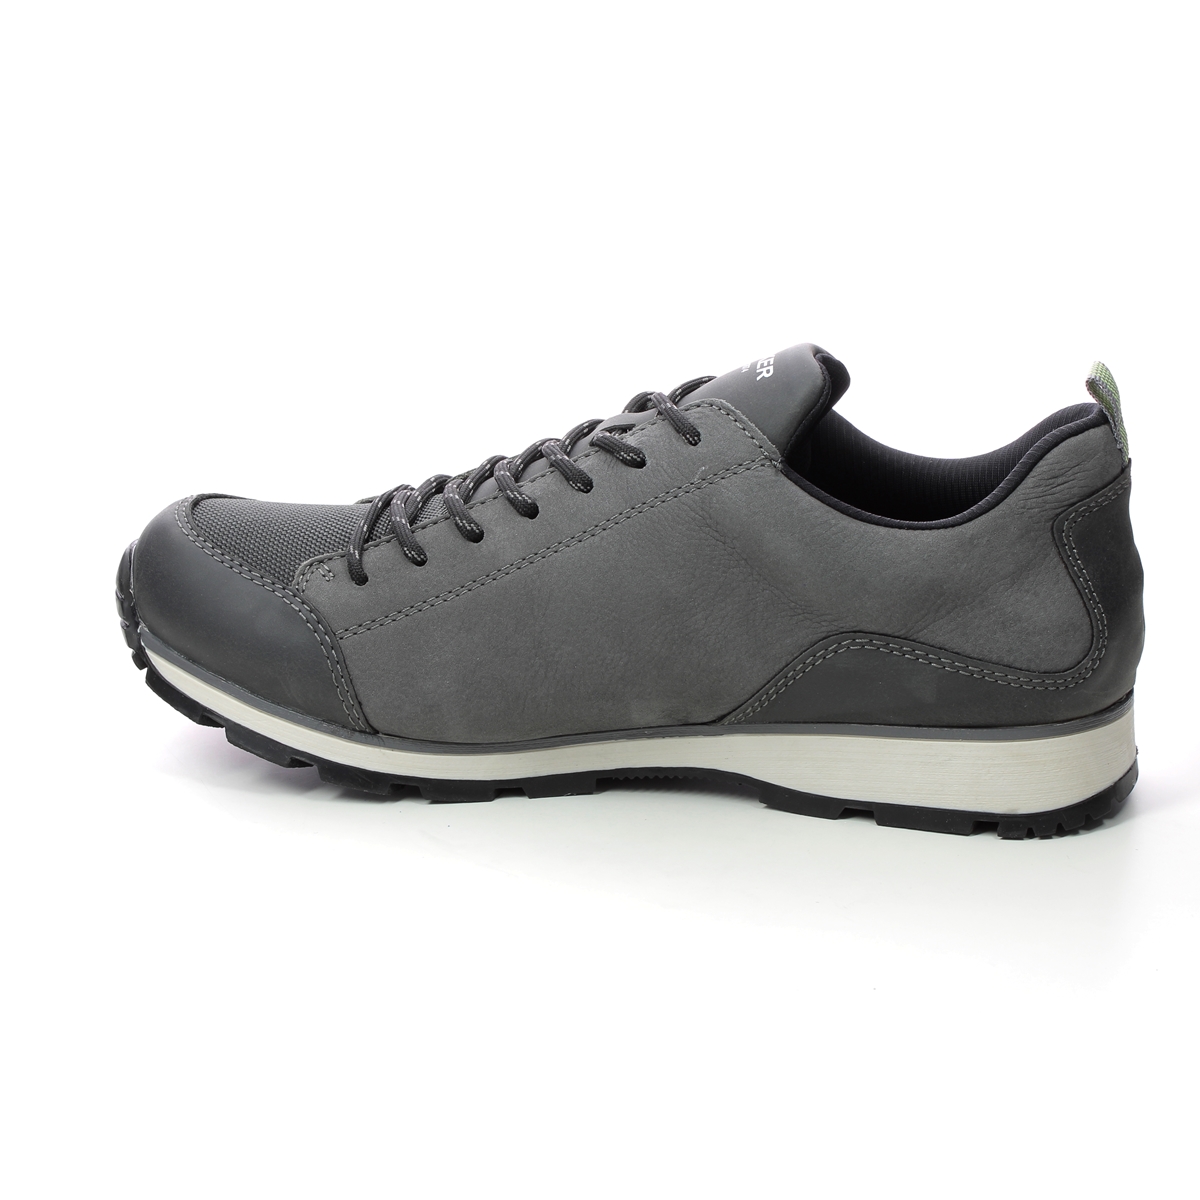 Rieker B5721-45 Grey leather Walking Shoes